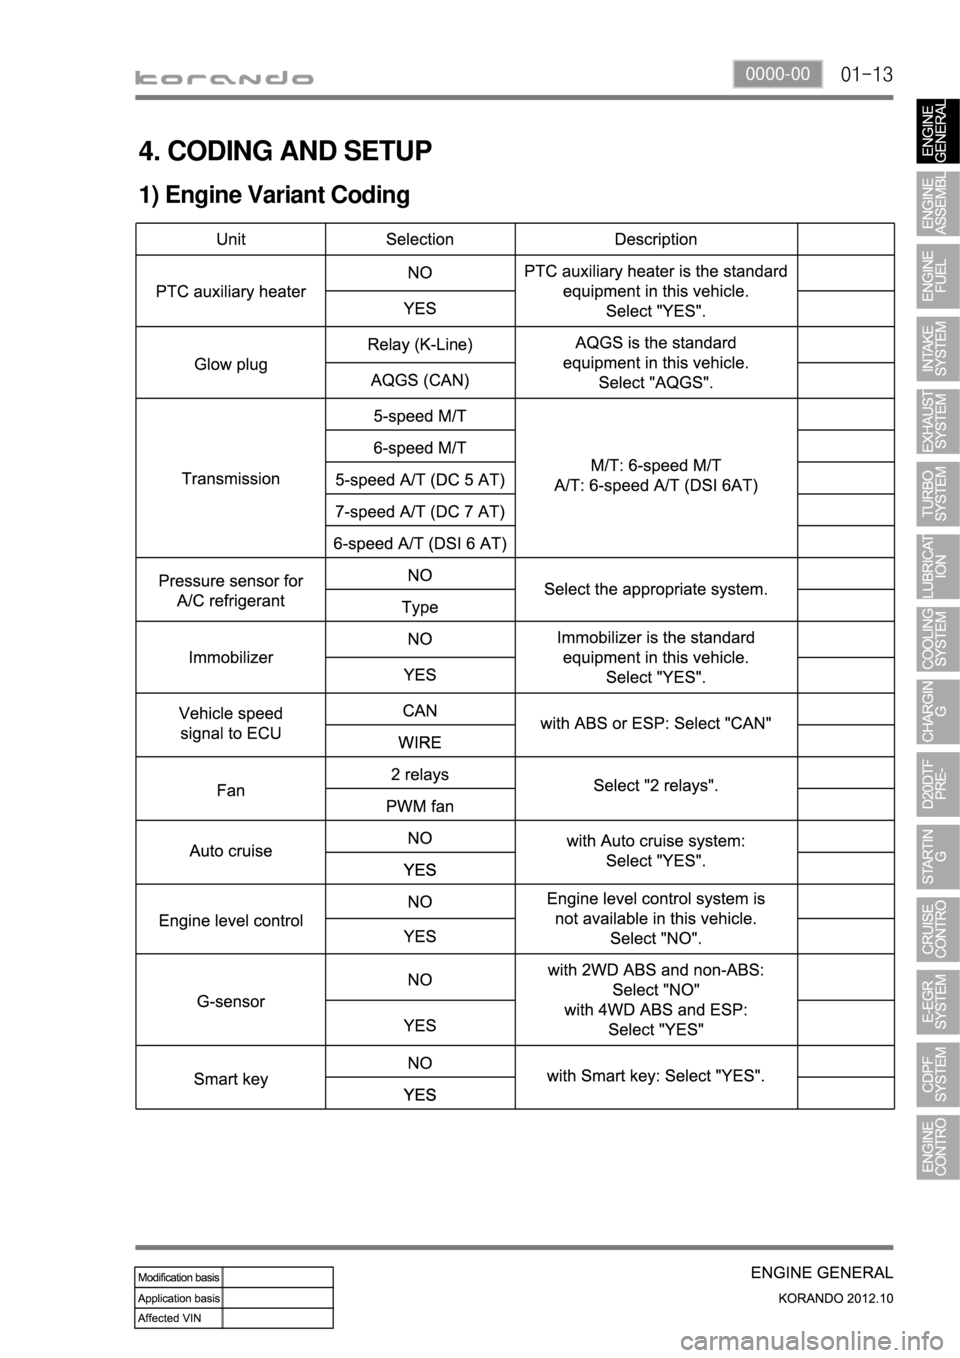 SSANGYONG KORANDO 2012  Service Manual 01-130000-00
4. CODING AND SETUP
1) Engine Variant Coding 